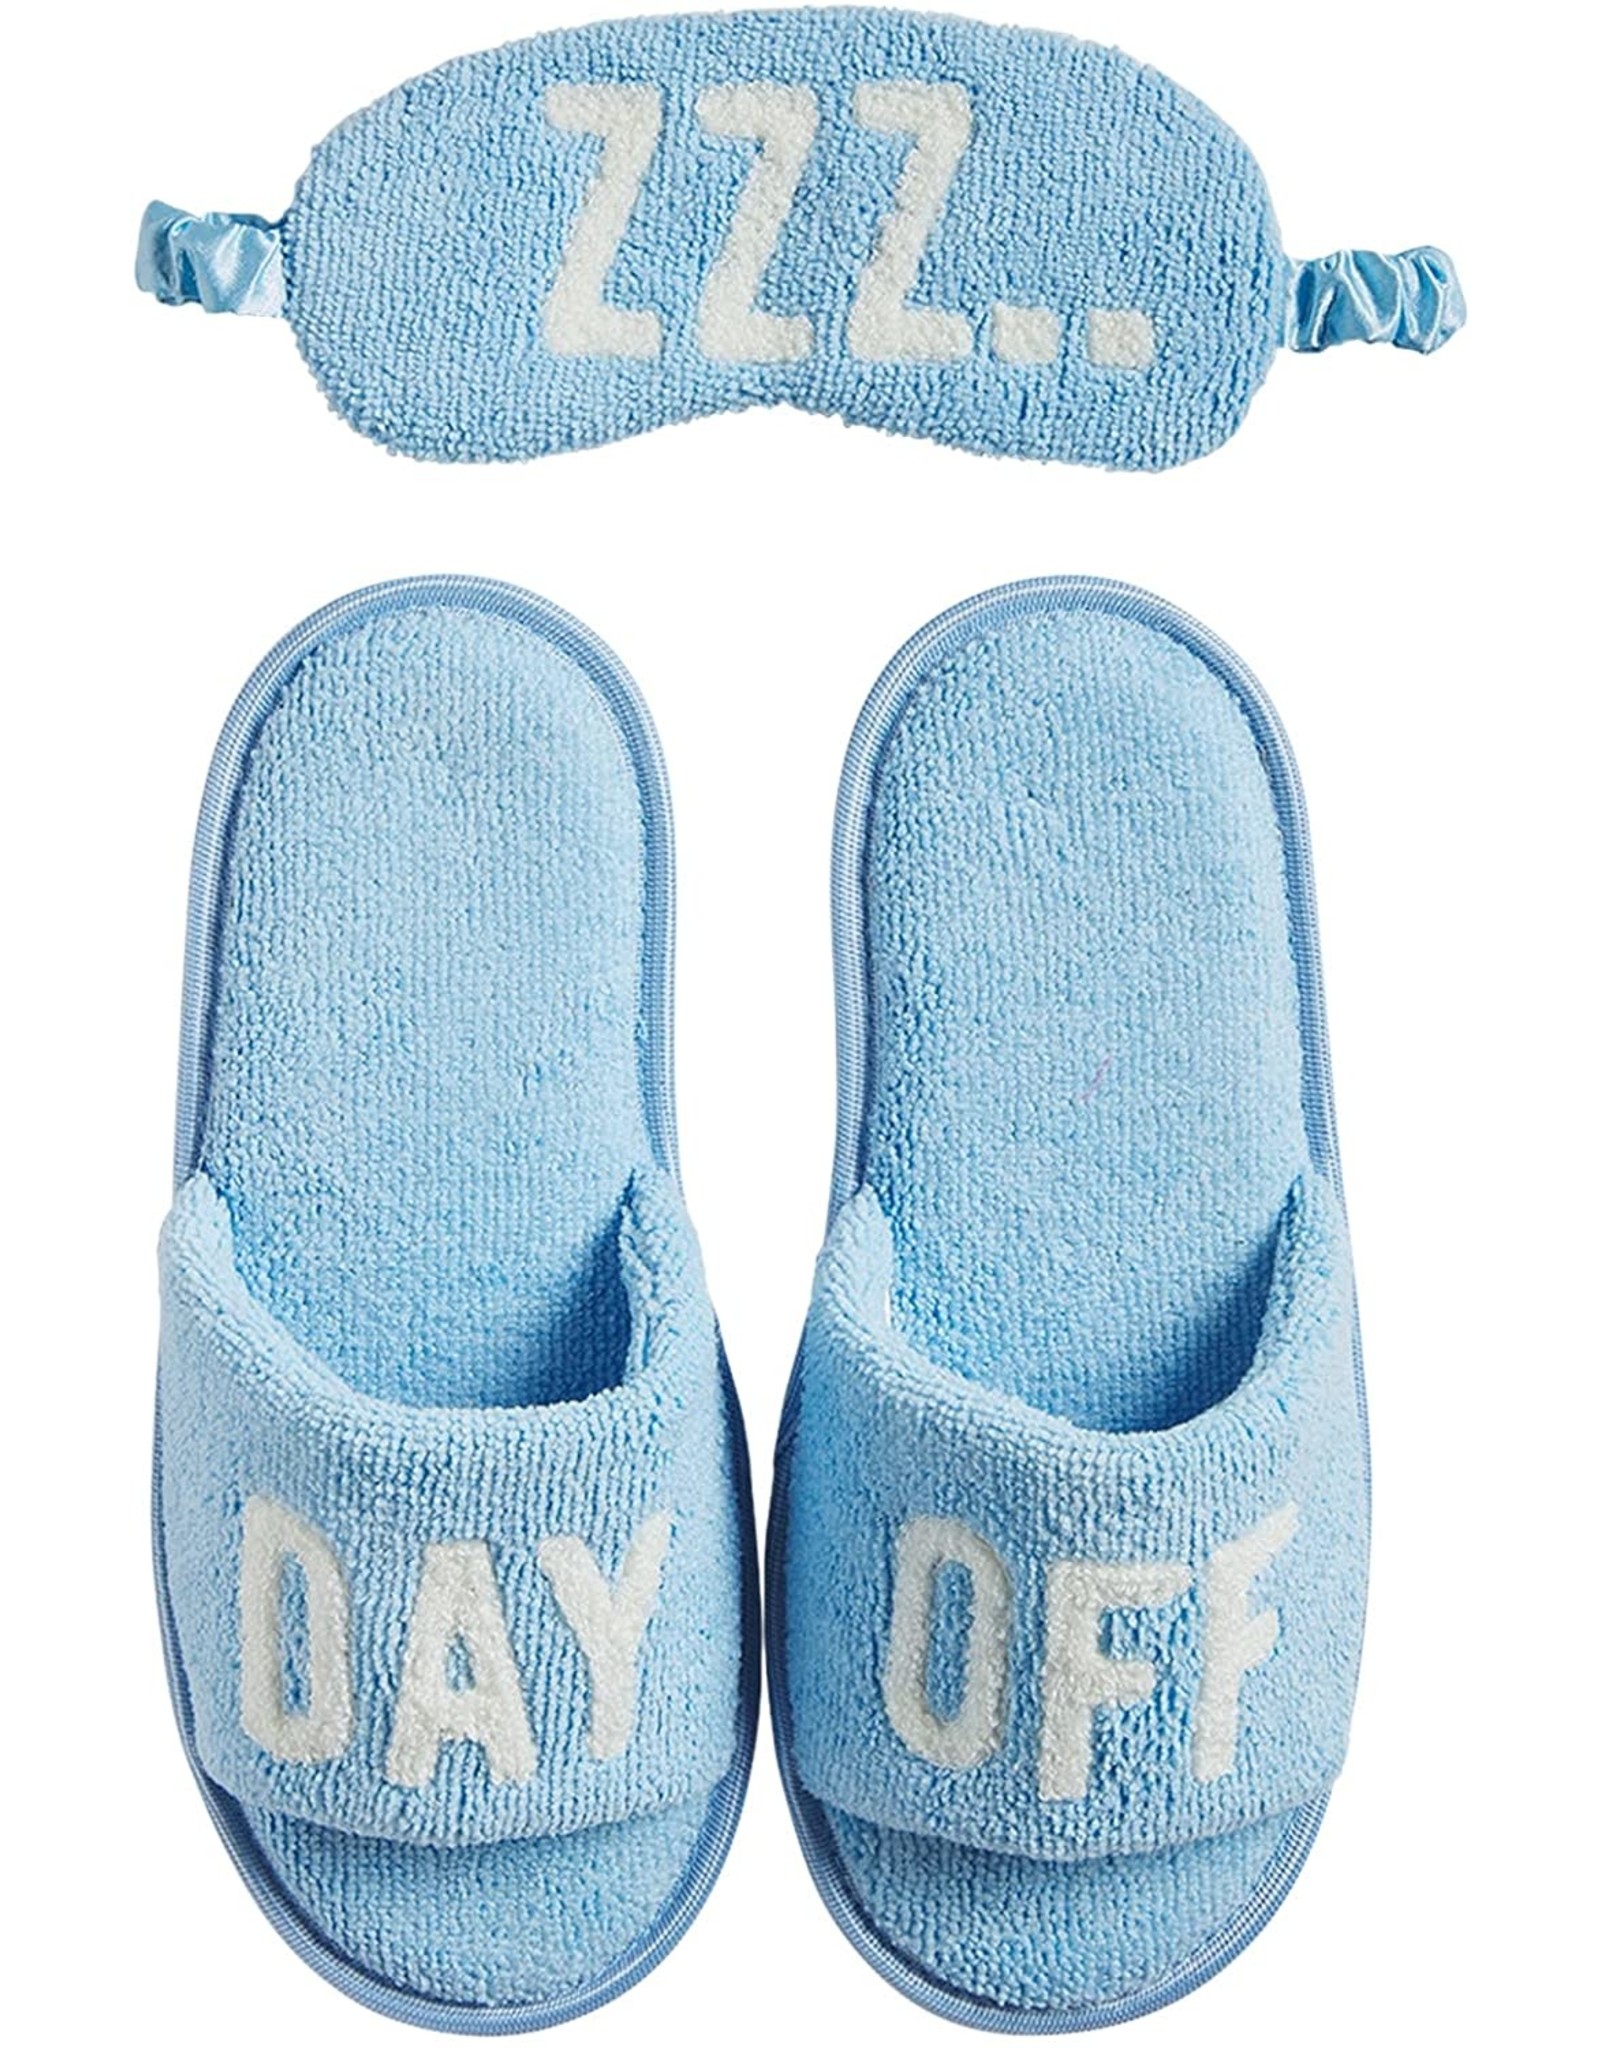 mud pie womens slippers and sleep mask set blue sm